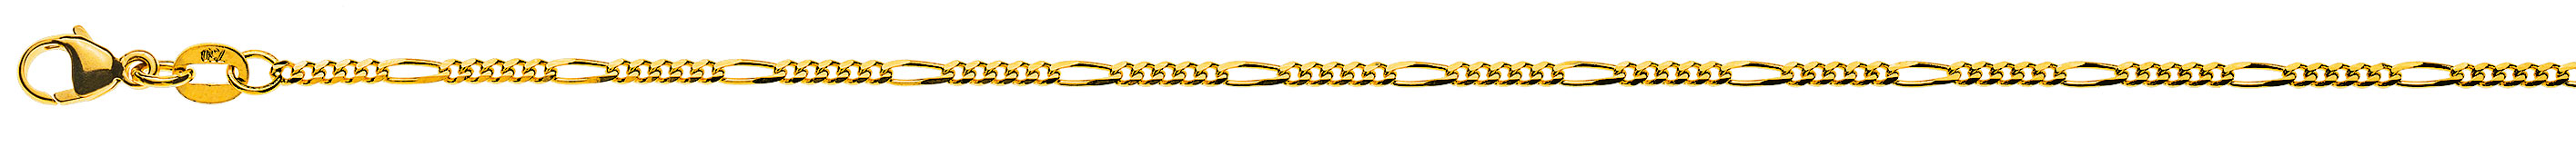 AURONOS Prestige Necklace yellow gold 18K Figaro chain 5+1 links 40cm 1.8mm